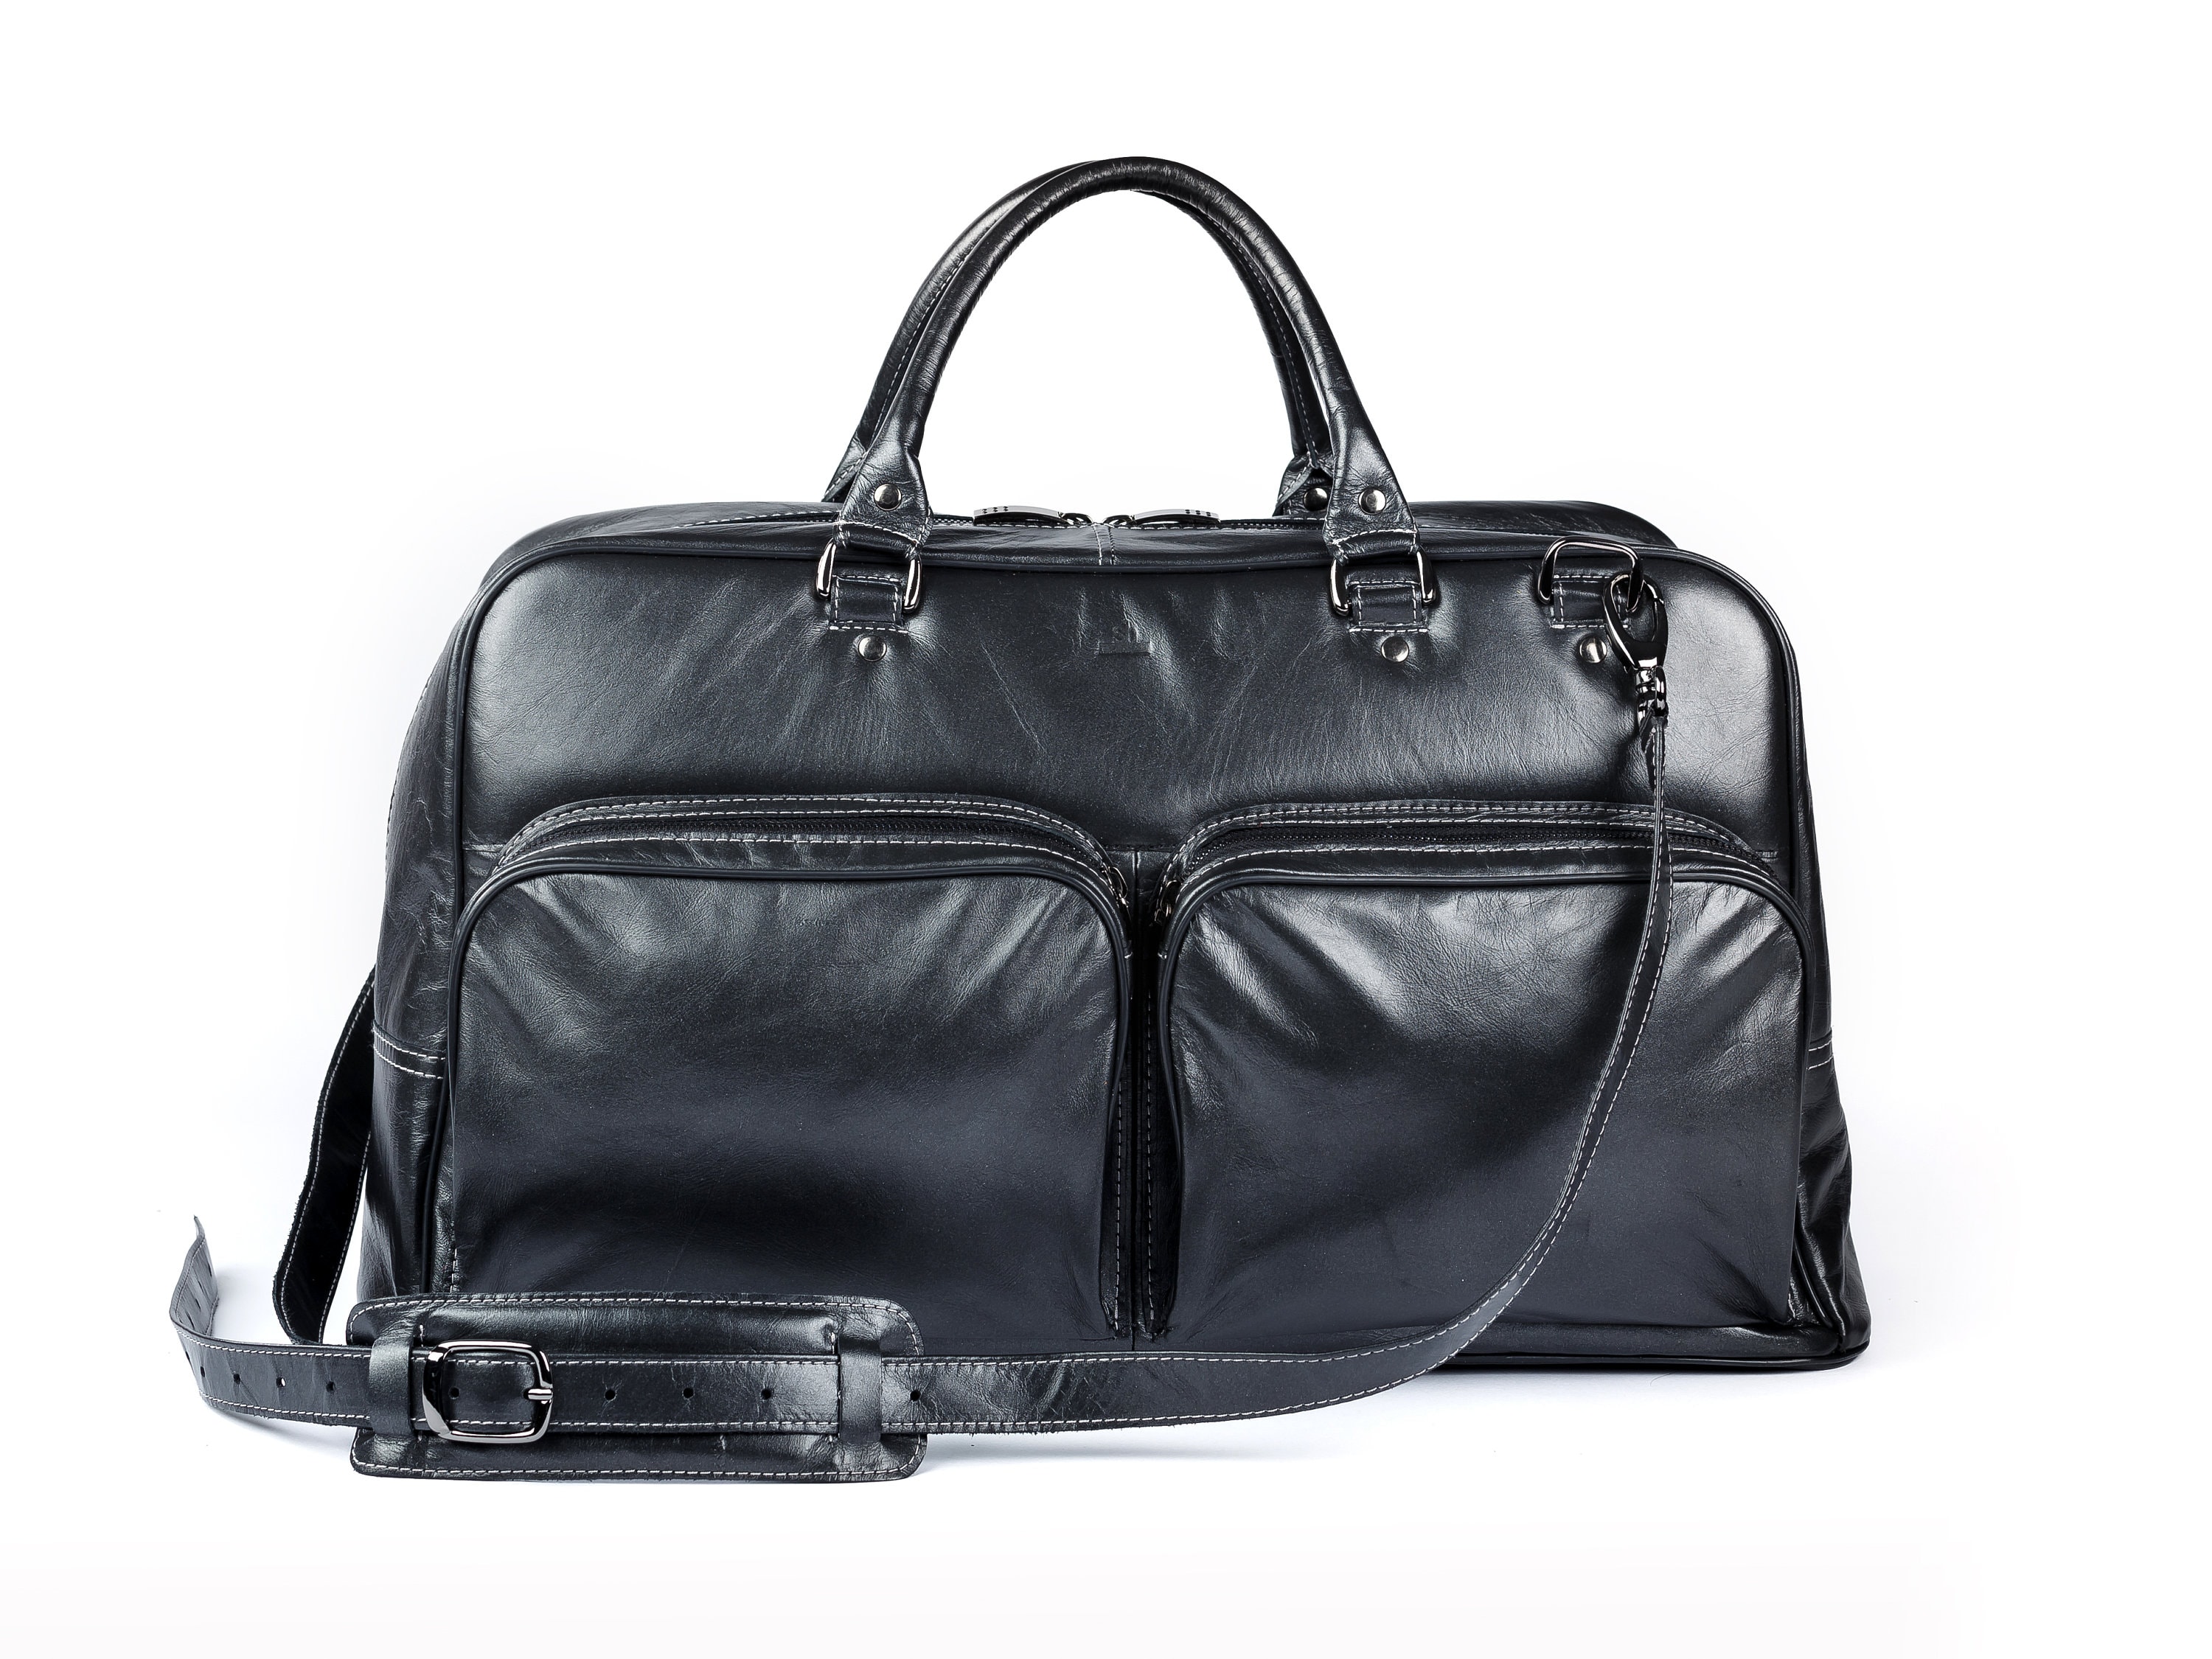 BLACK LEATHER travel bag Leather duffel bag Weekender bag | Etsy